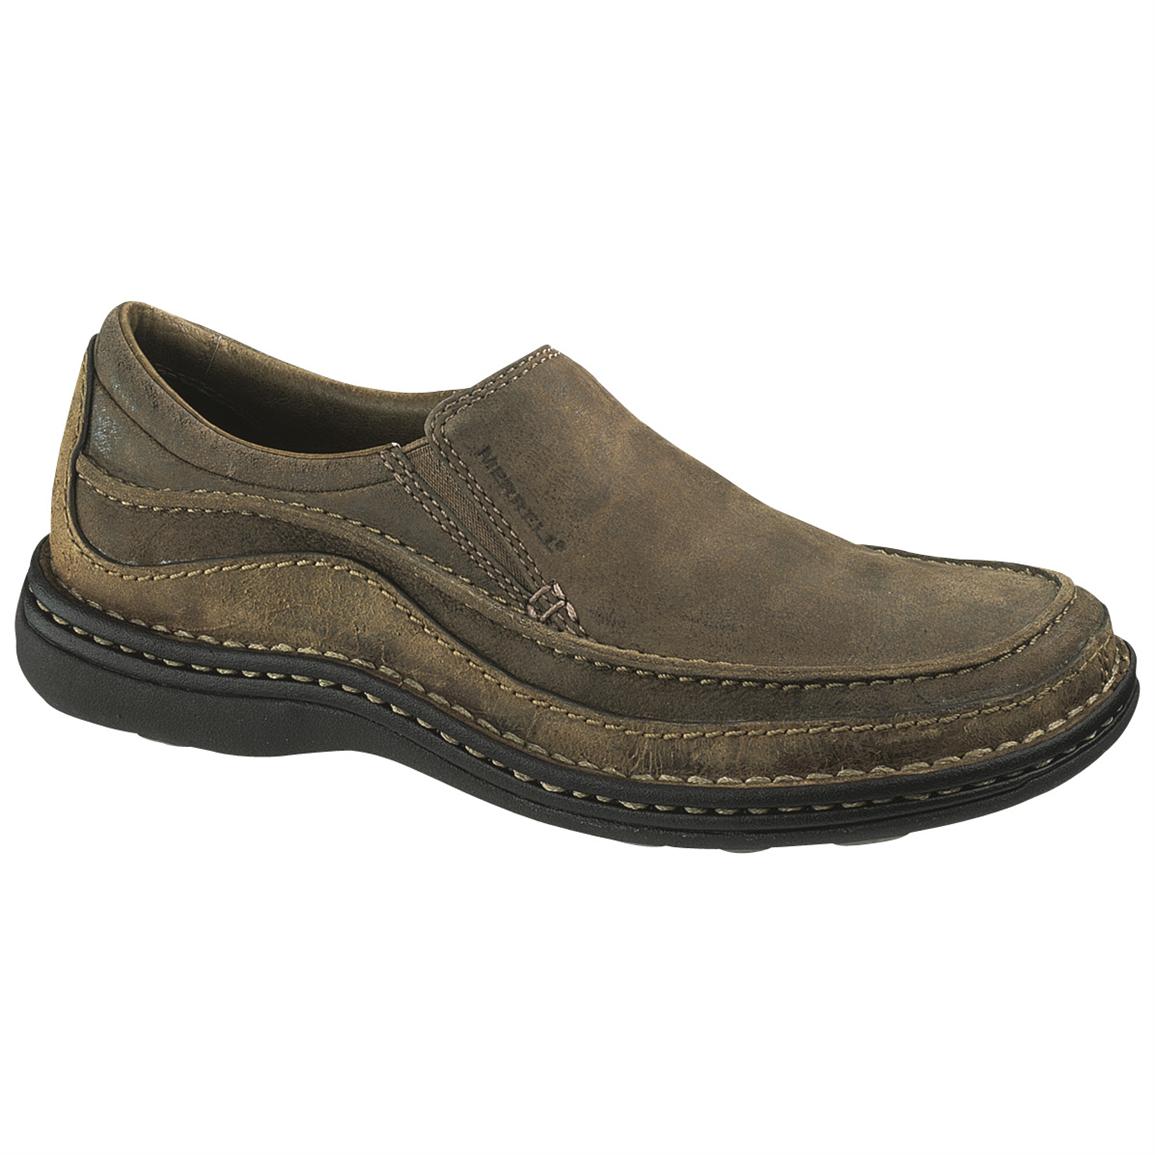 Merrell® Men's Guru Shoes - 139910, Casual Shoes at Sportsman's Guide